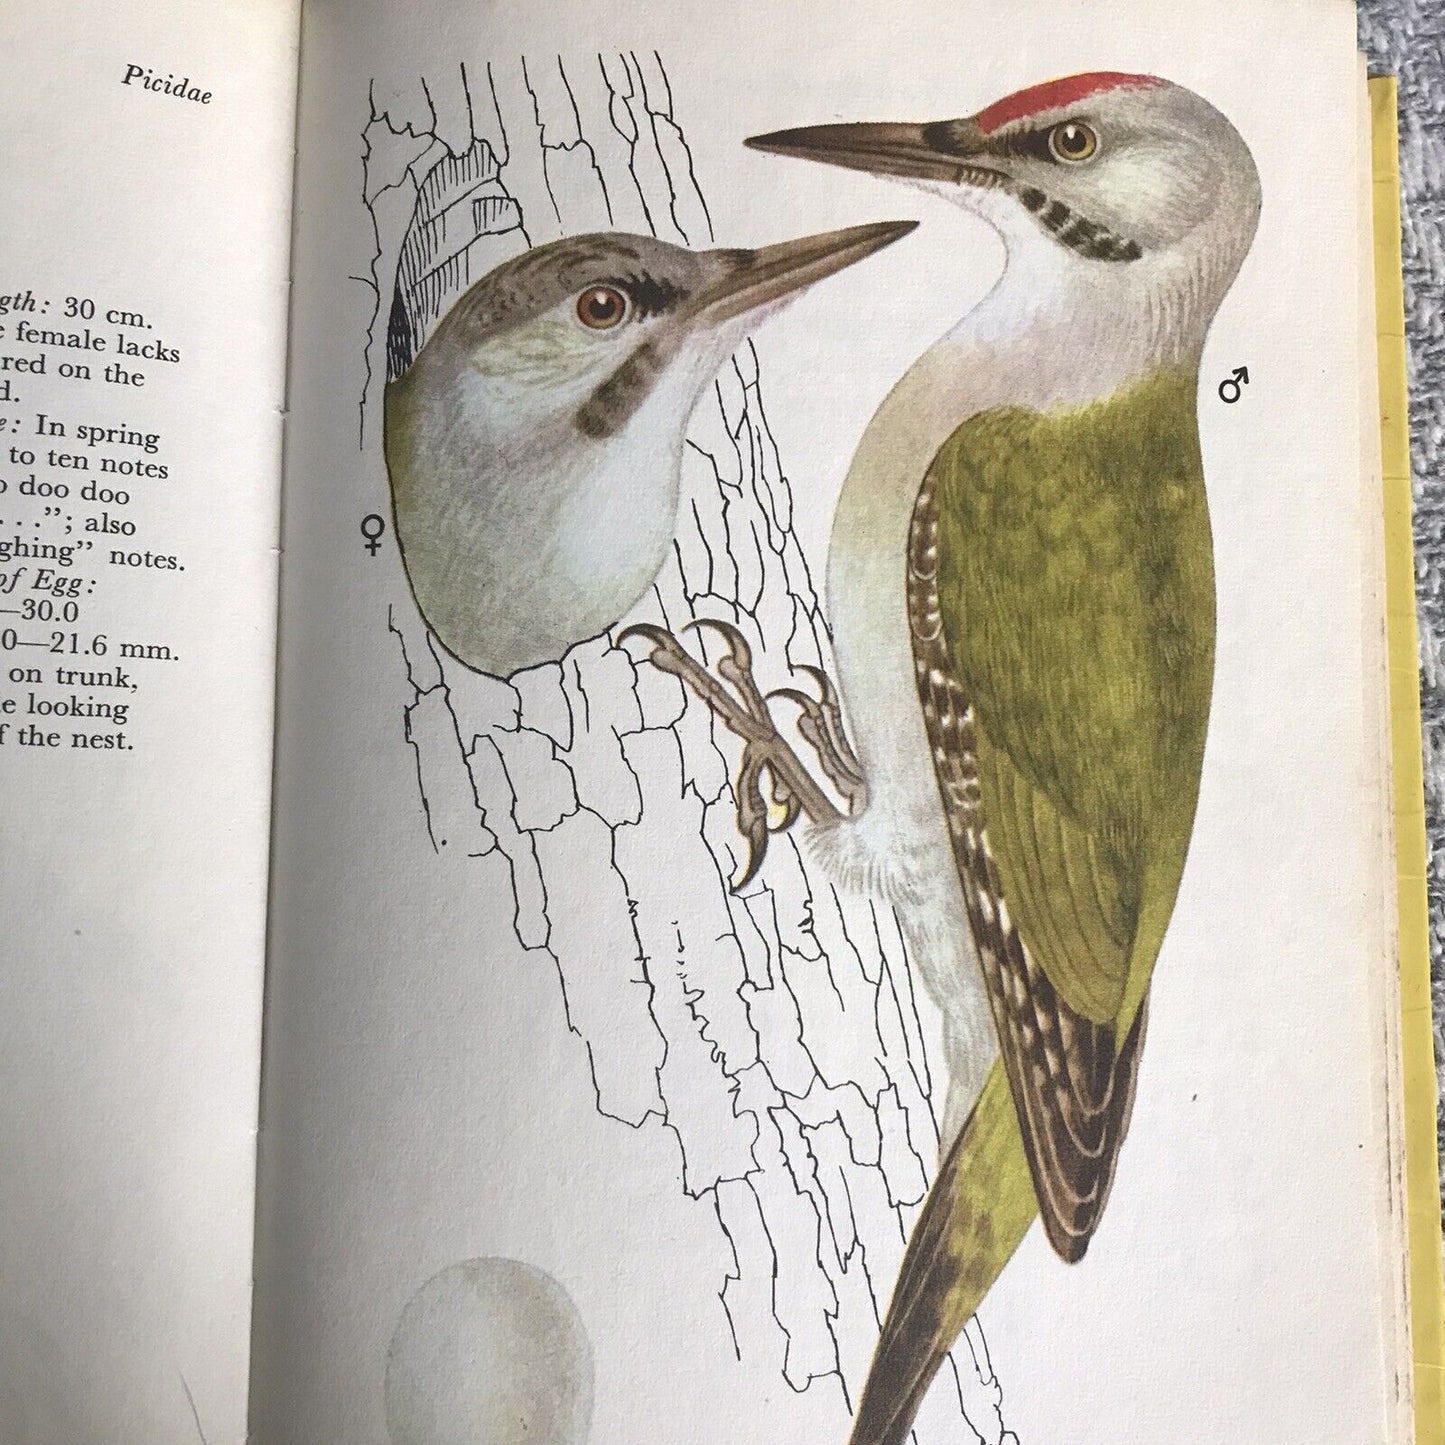 1974*1.* Eier und Nester von Garten- und Feldvögeln – Jiri Felix (Kvetoslav Hisek Illust)